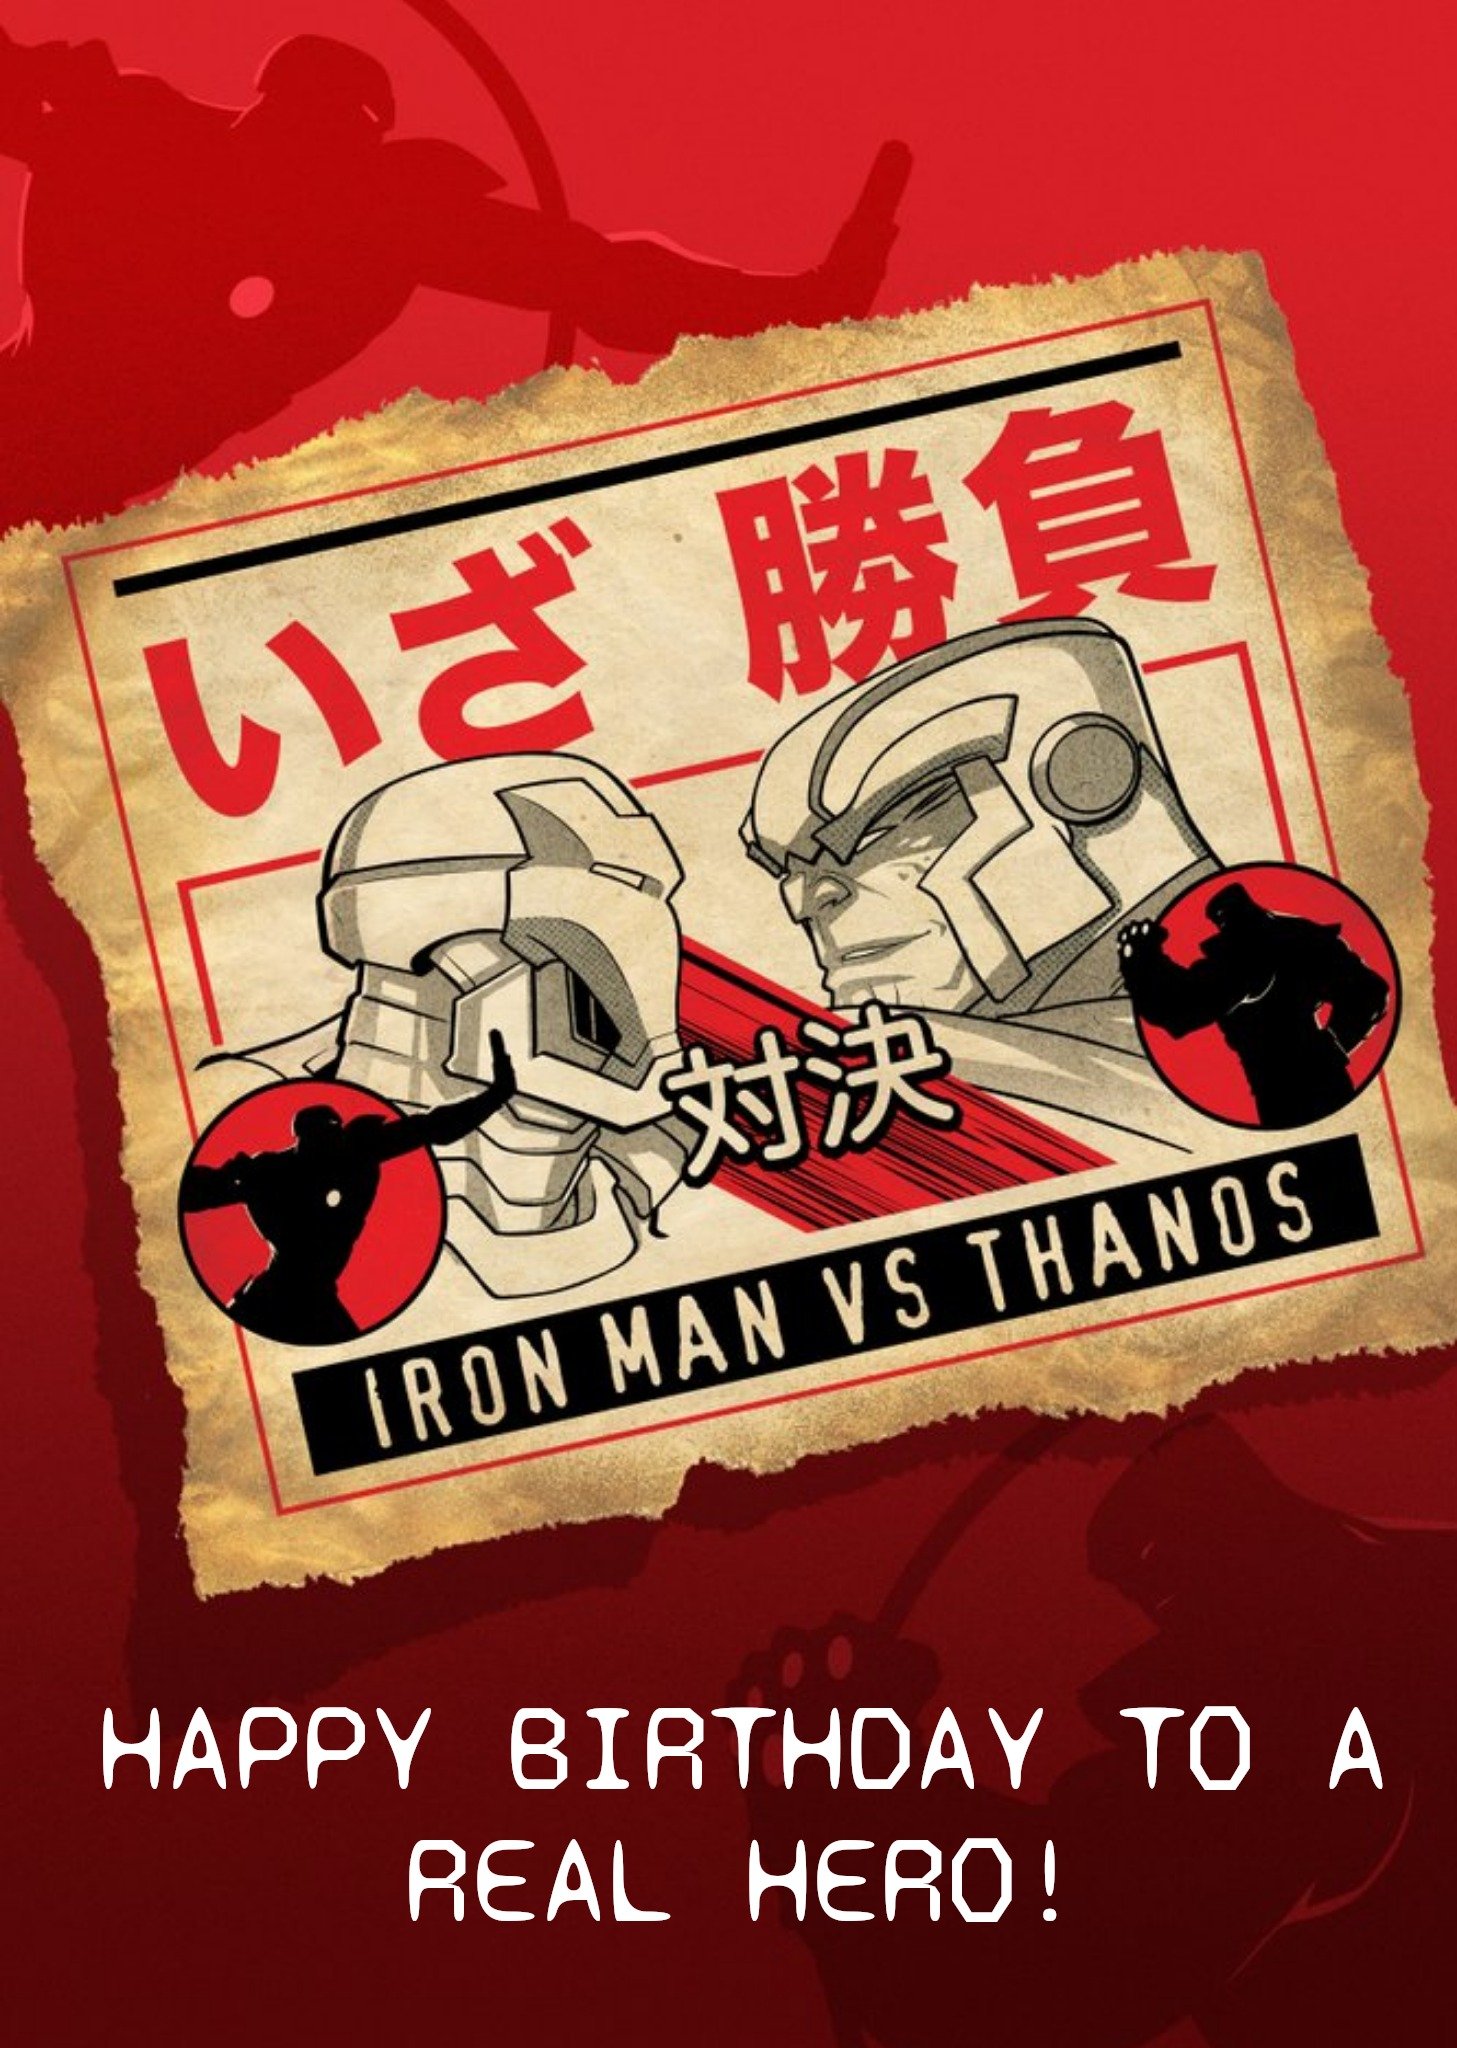 Disney Marvel Comics Avengers Iron Man Vs Thanos Birthday Card, Large